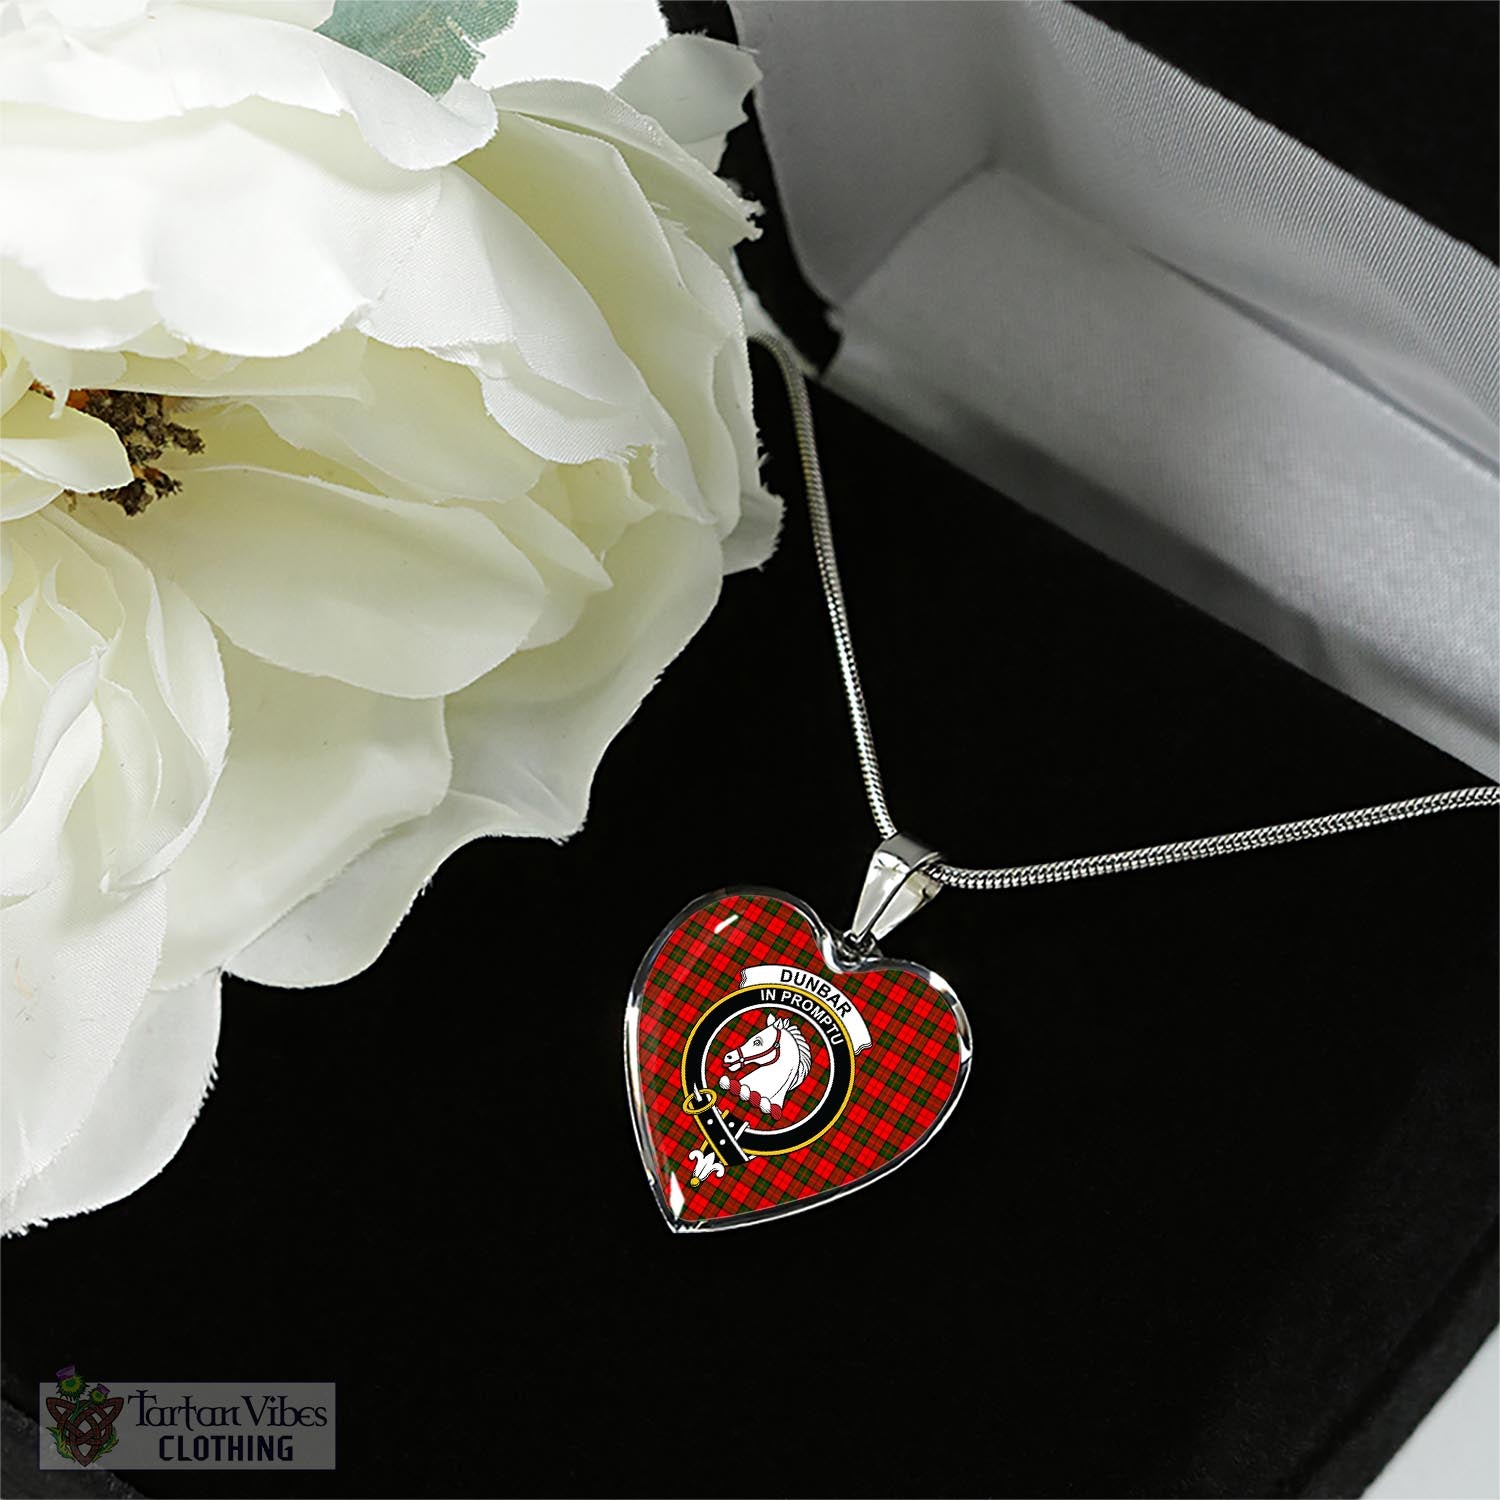 Tartan Vibes Clothing Dunbar Modern Tartan Heart Necklace with Family Crest